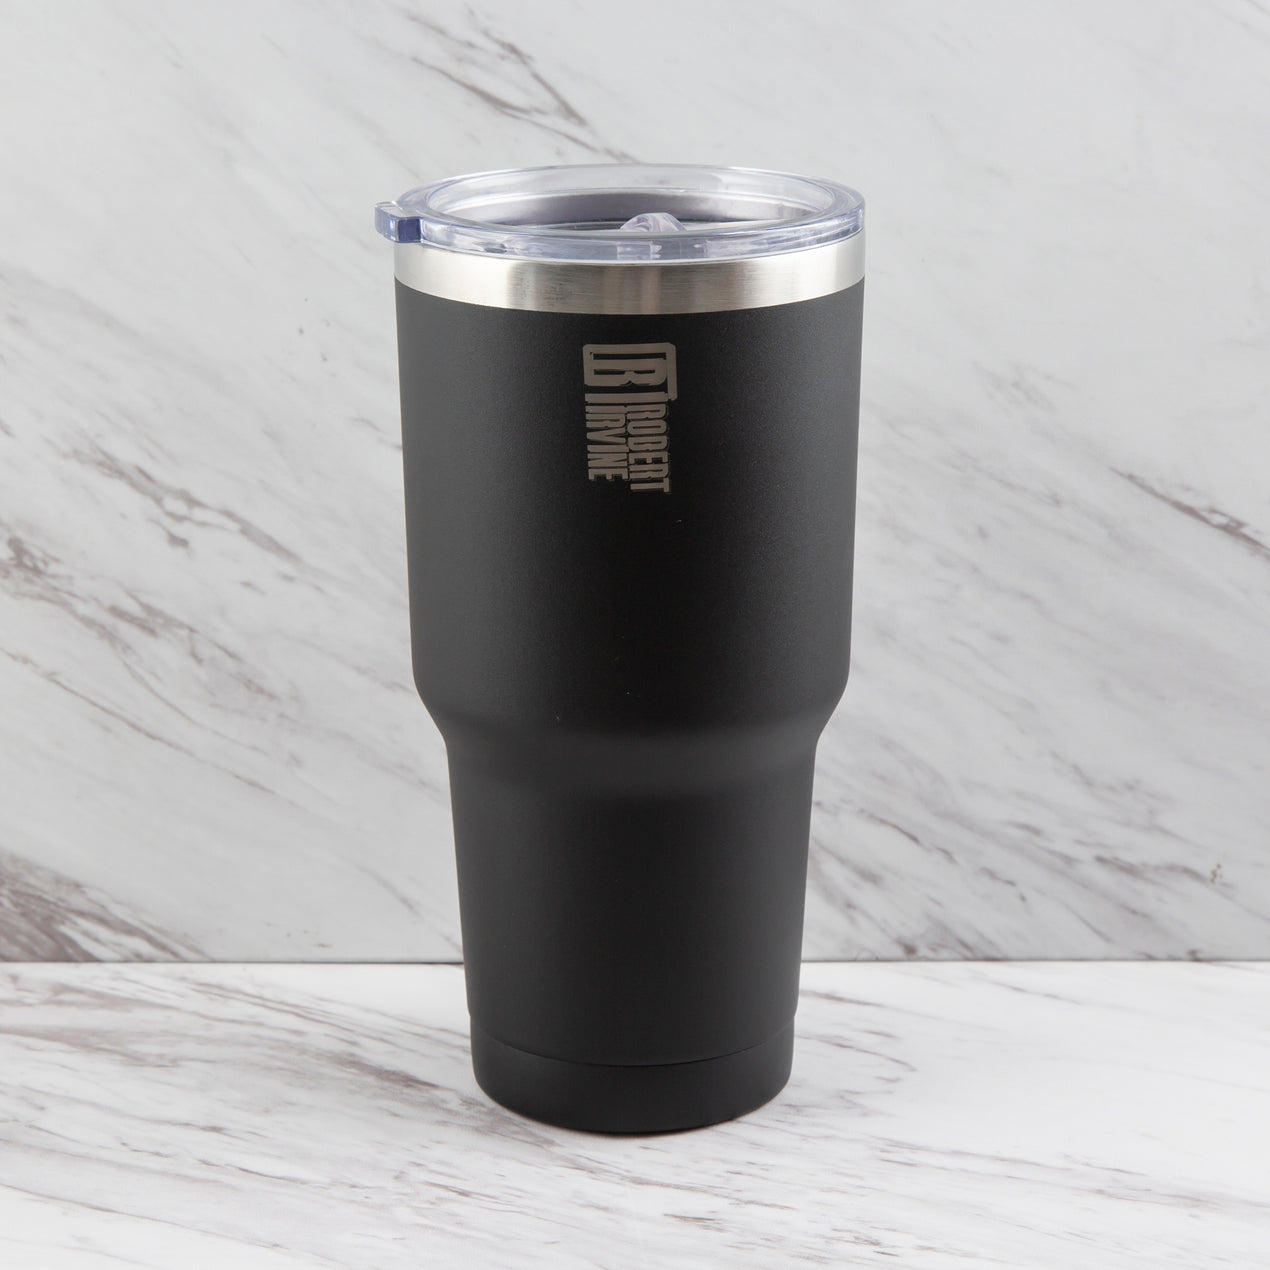 RTIC 30 oz Insulated Tumbler Stainless Steel Coffee Travel Mug